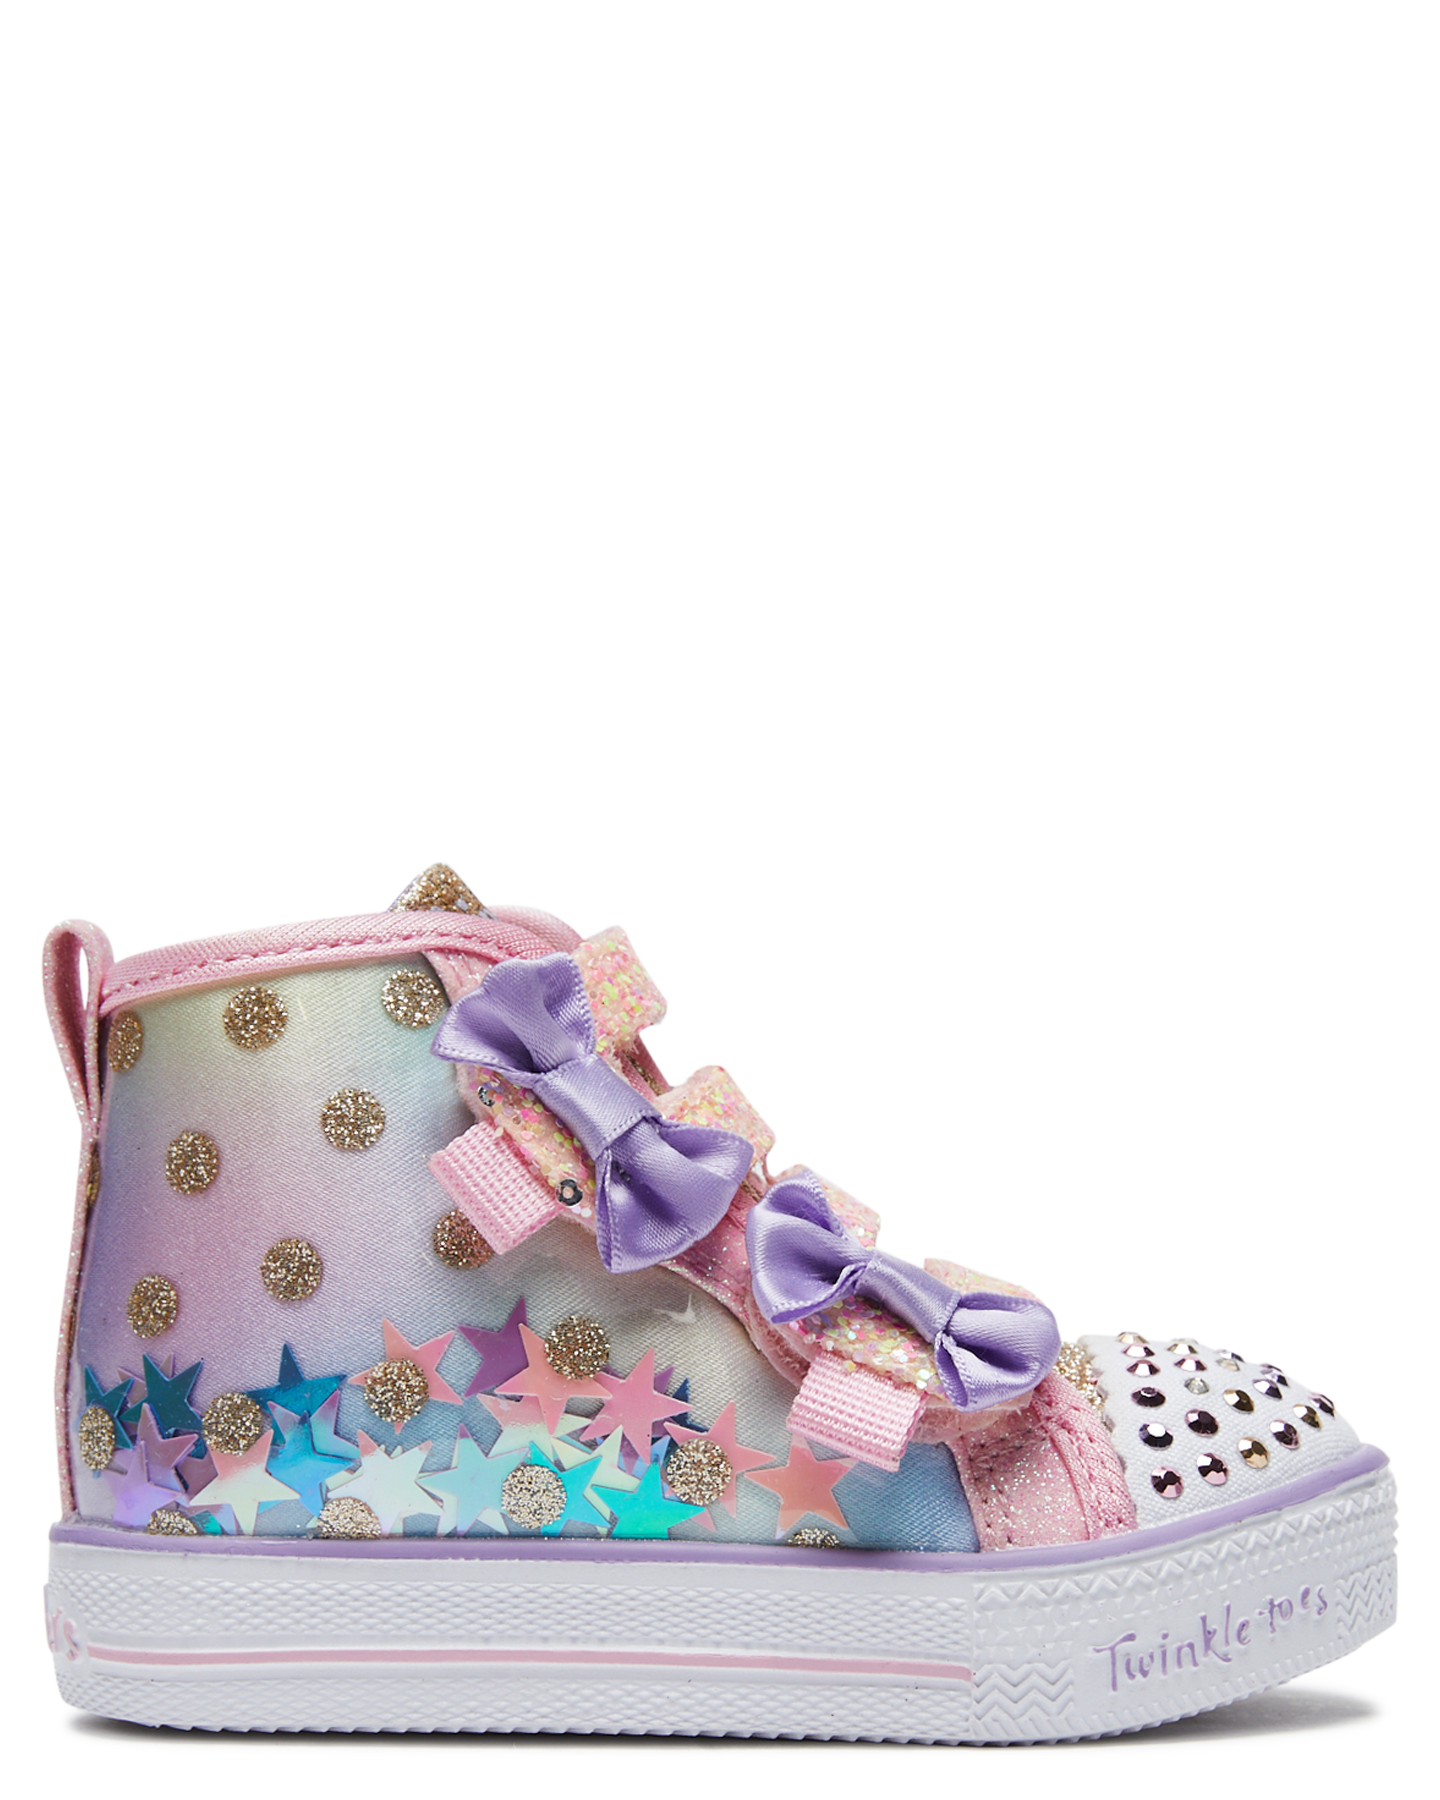 Skechers Girls Shuffle Confetti Star Shoe - Toddler - Light Pink Multi | SurfStitch